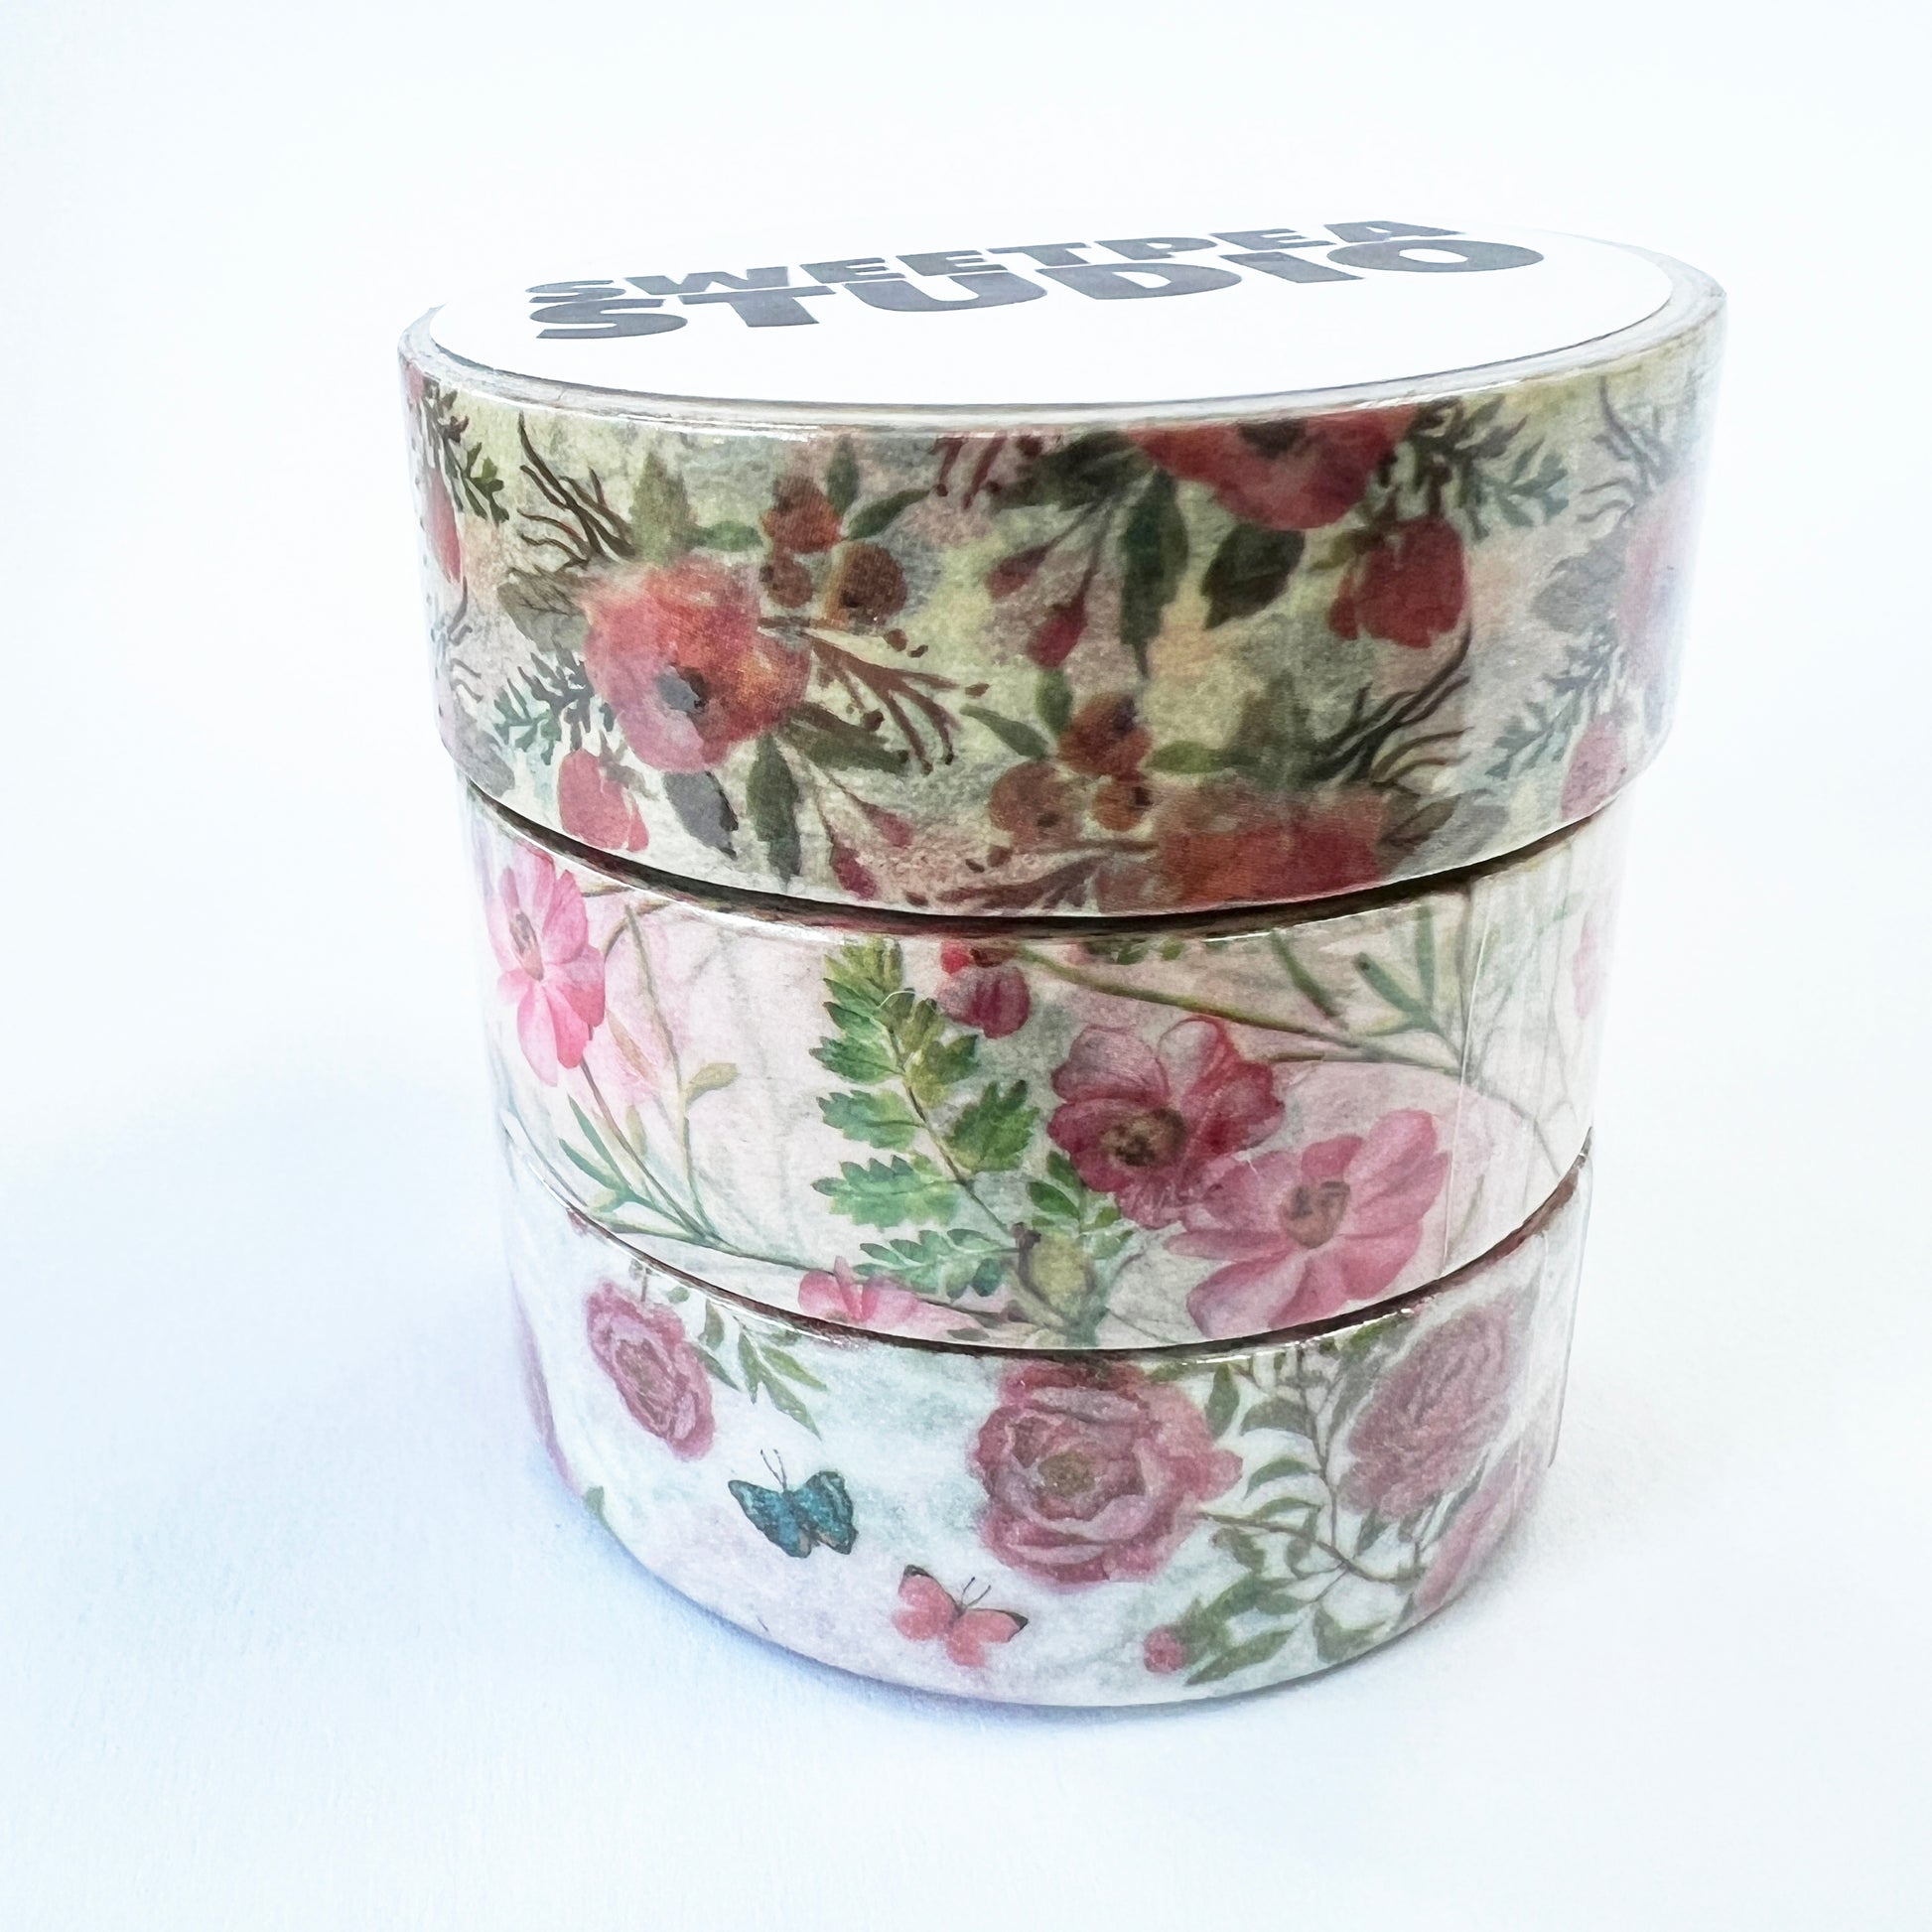 Floral Washi Tape Set of 3 | Pink Tones | 1.5cm x 10m & 5m | Stationery Scrapbooking Journalling - SweetpeaStore